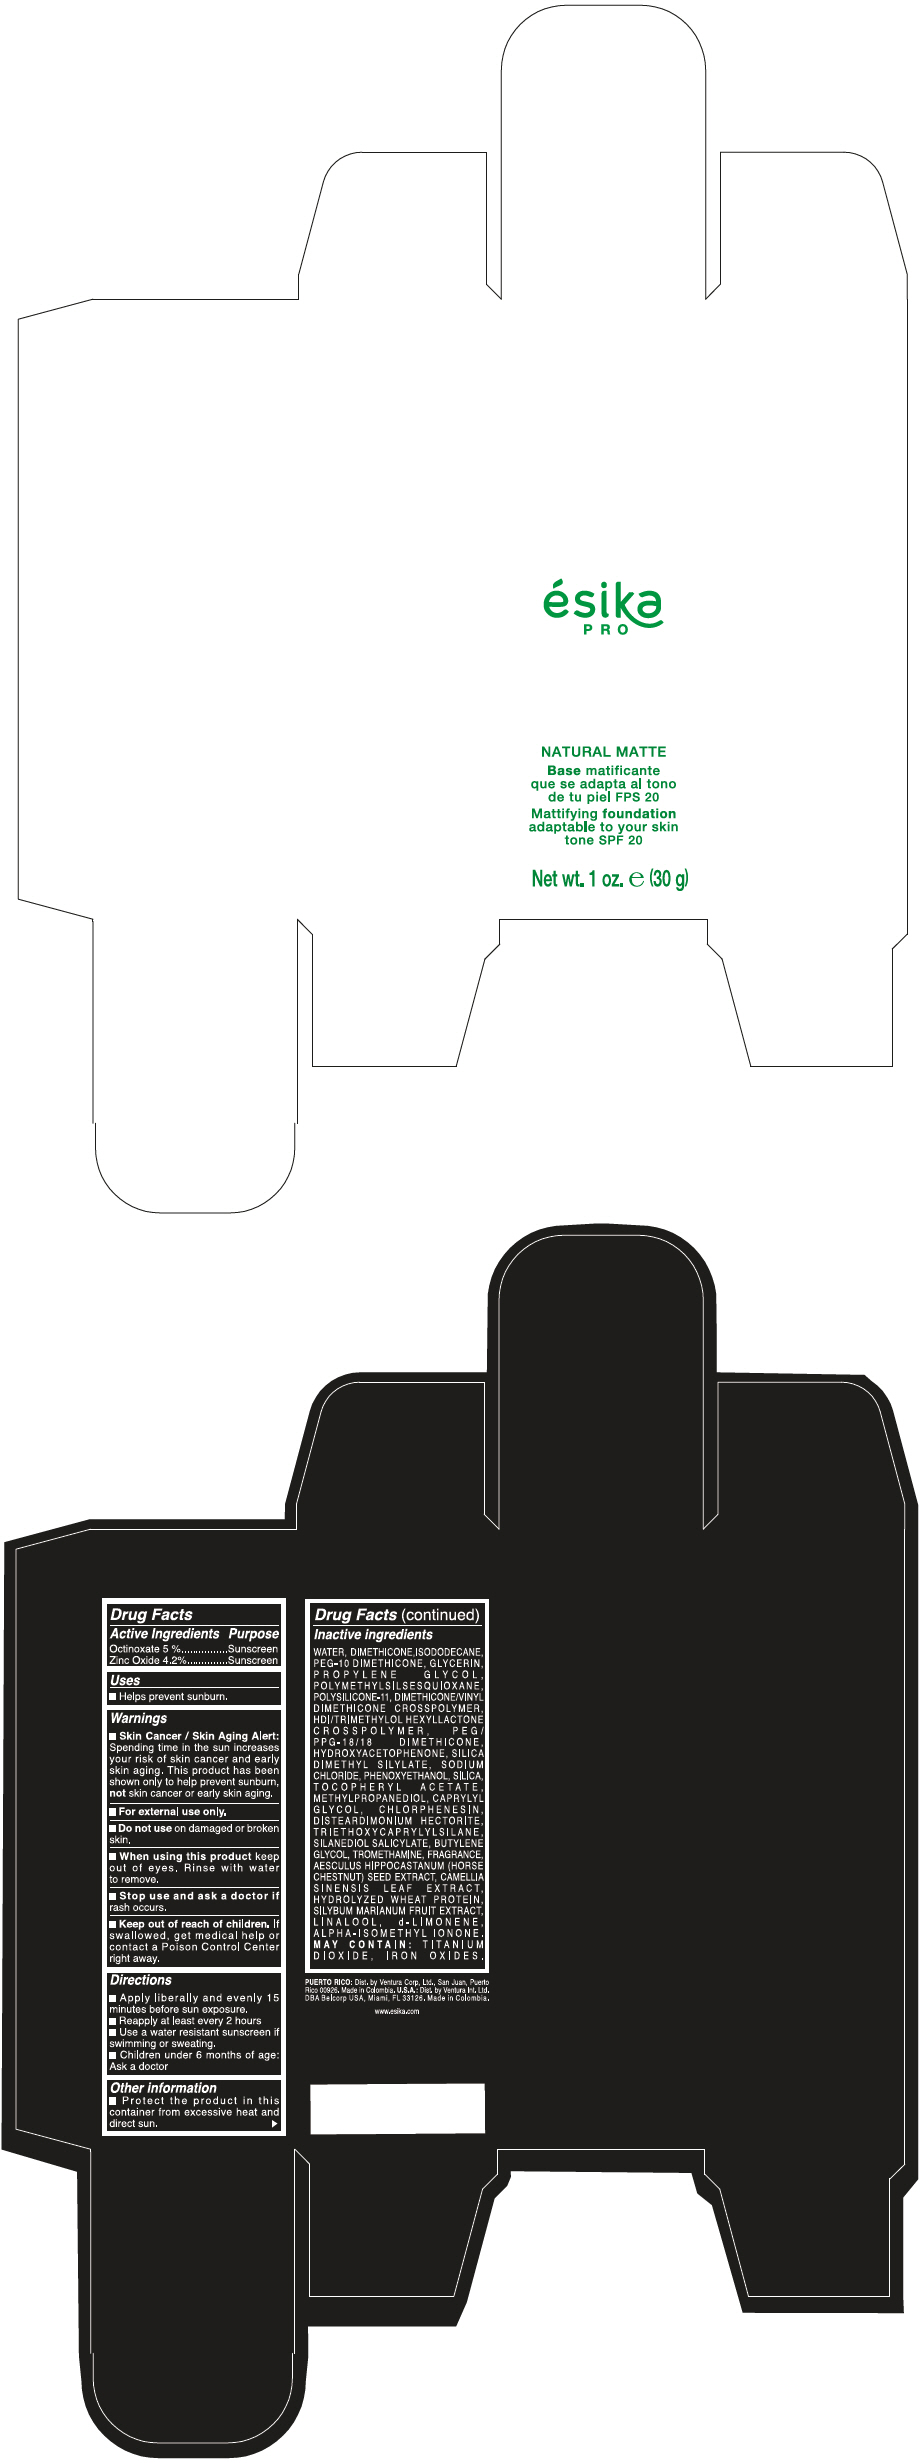 PRINCIPAL DISPLAY PANEL - 30 g Bottle Box - Medio2/Beige